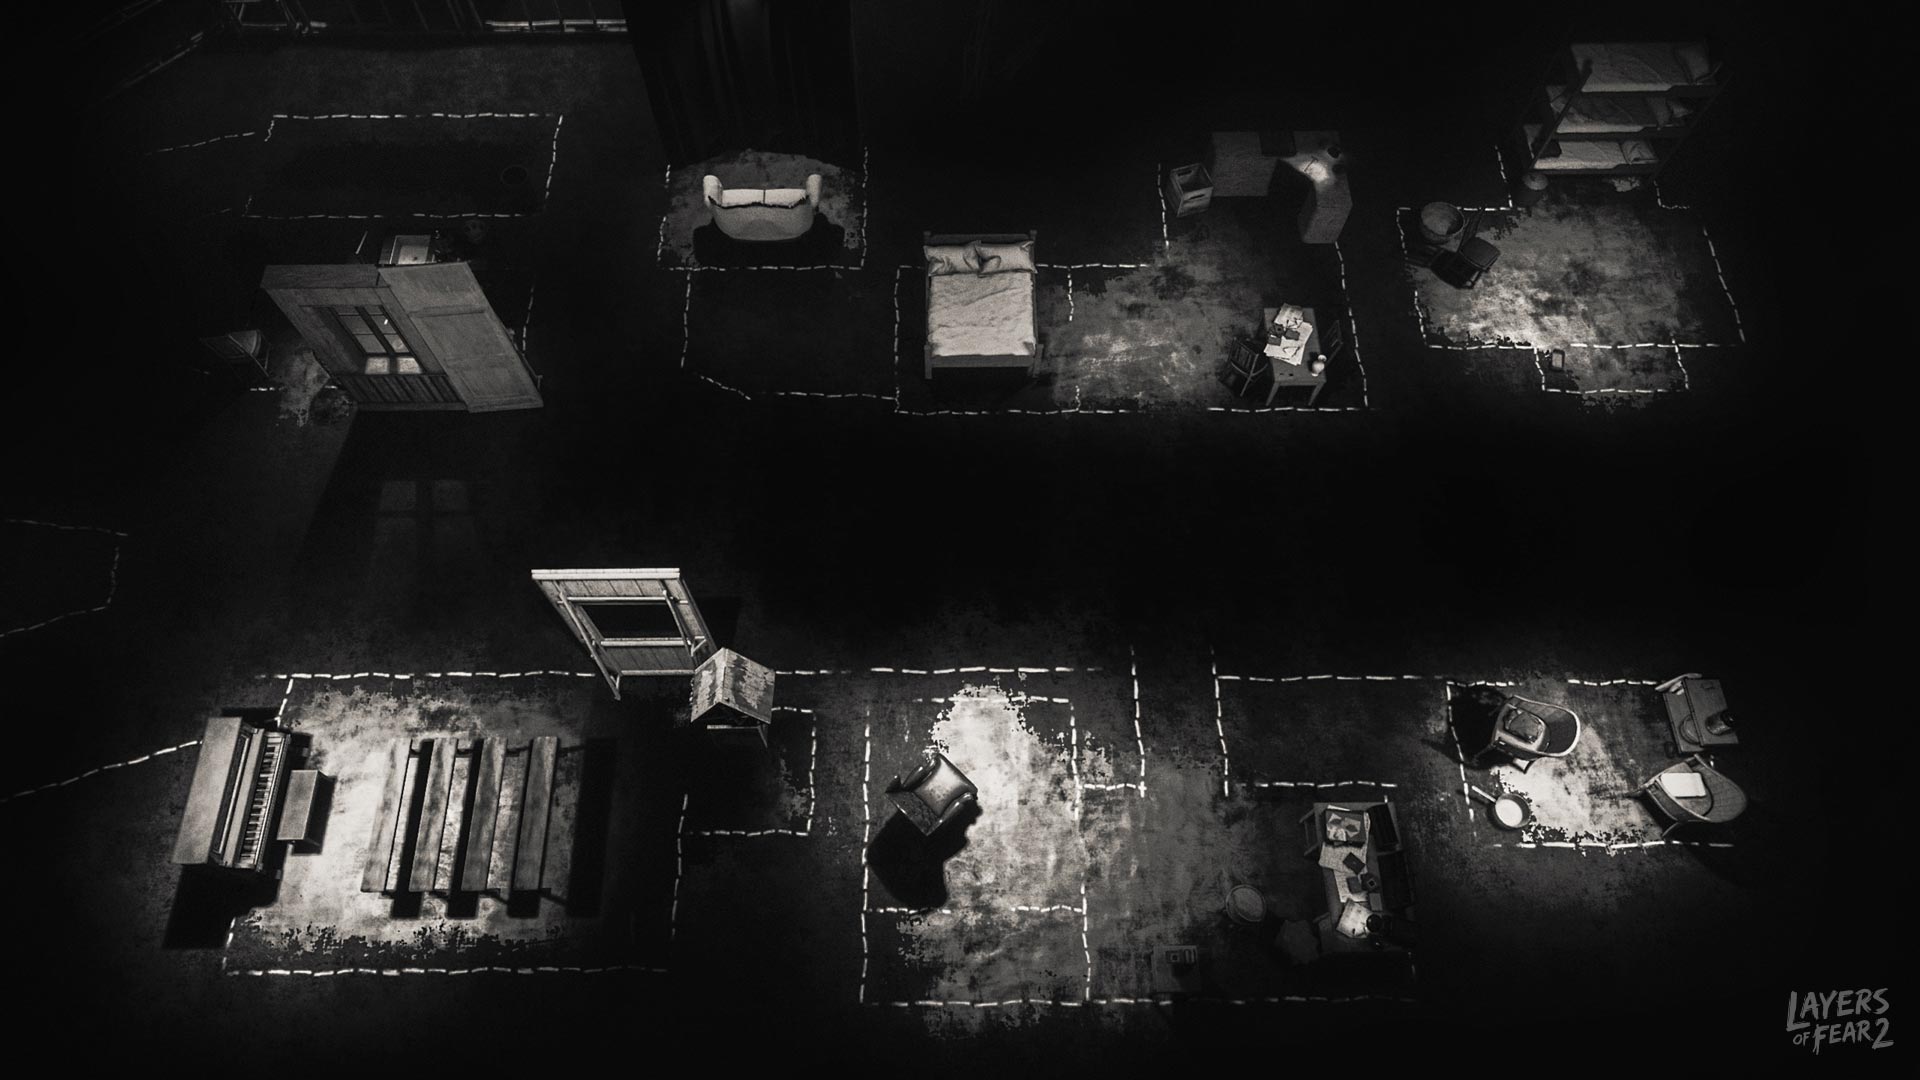 Layers of Fear 2 - screenshot 5